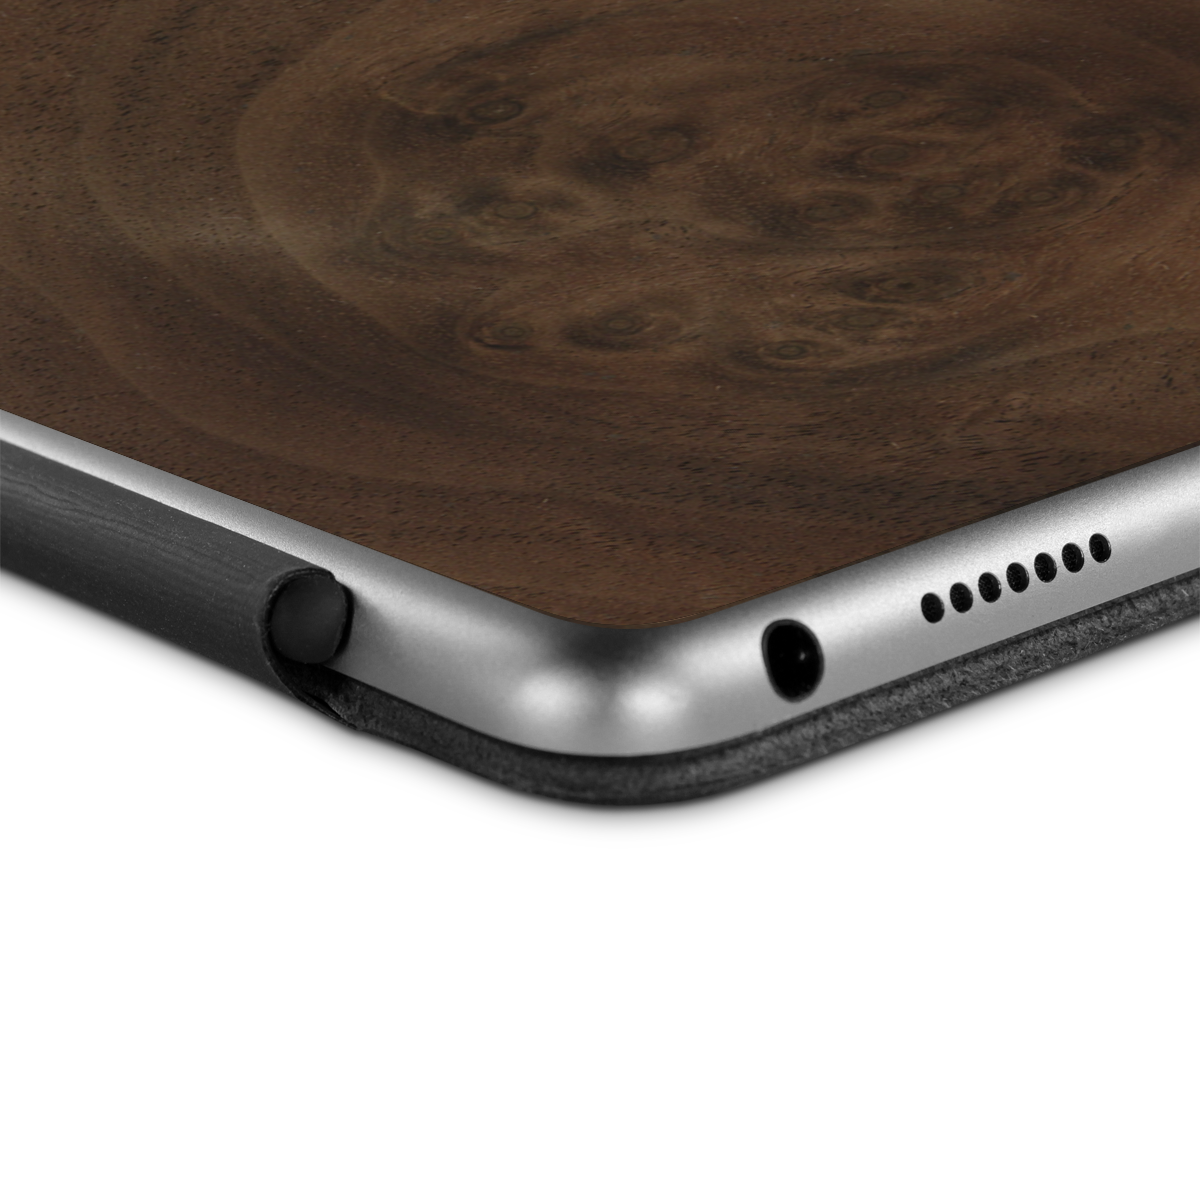 iPad Pro 11-inch — #WoodBack Skin